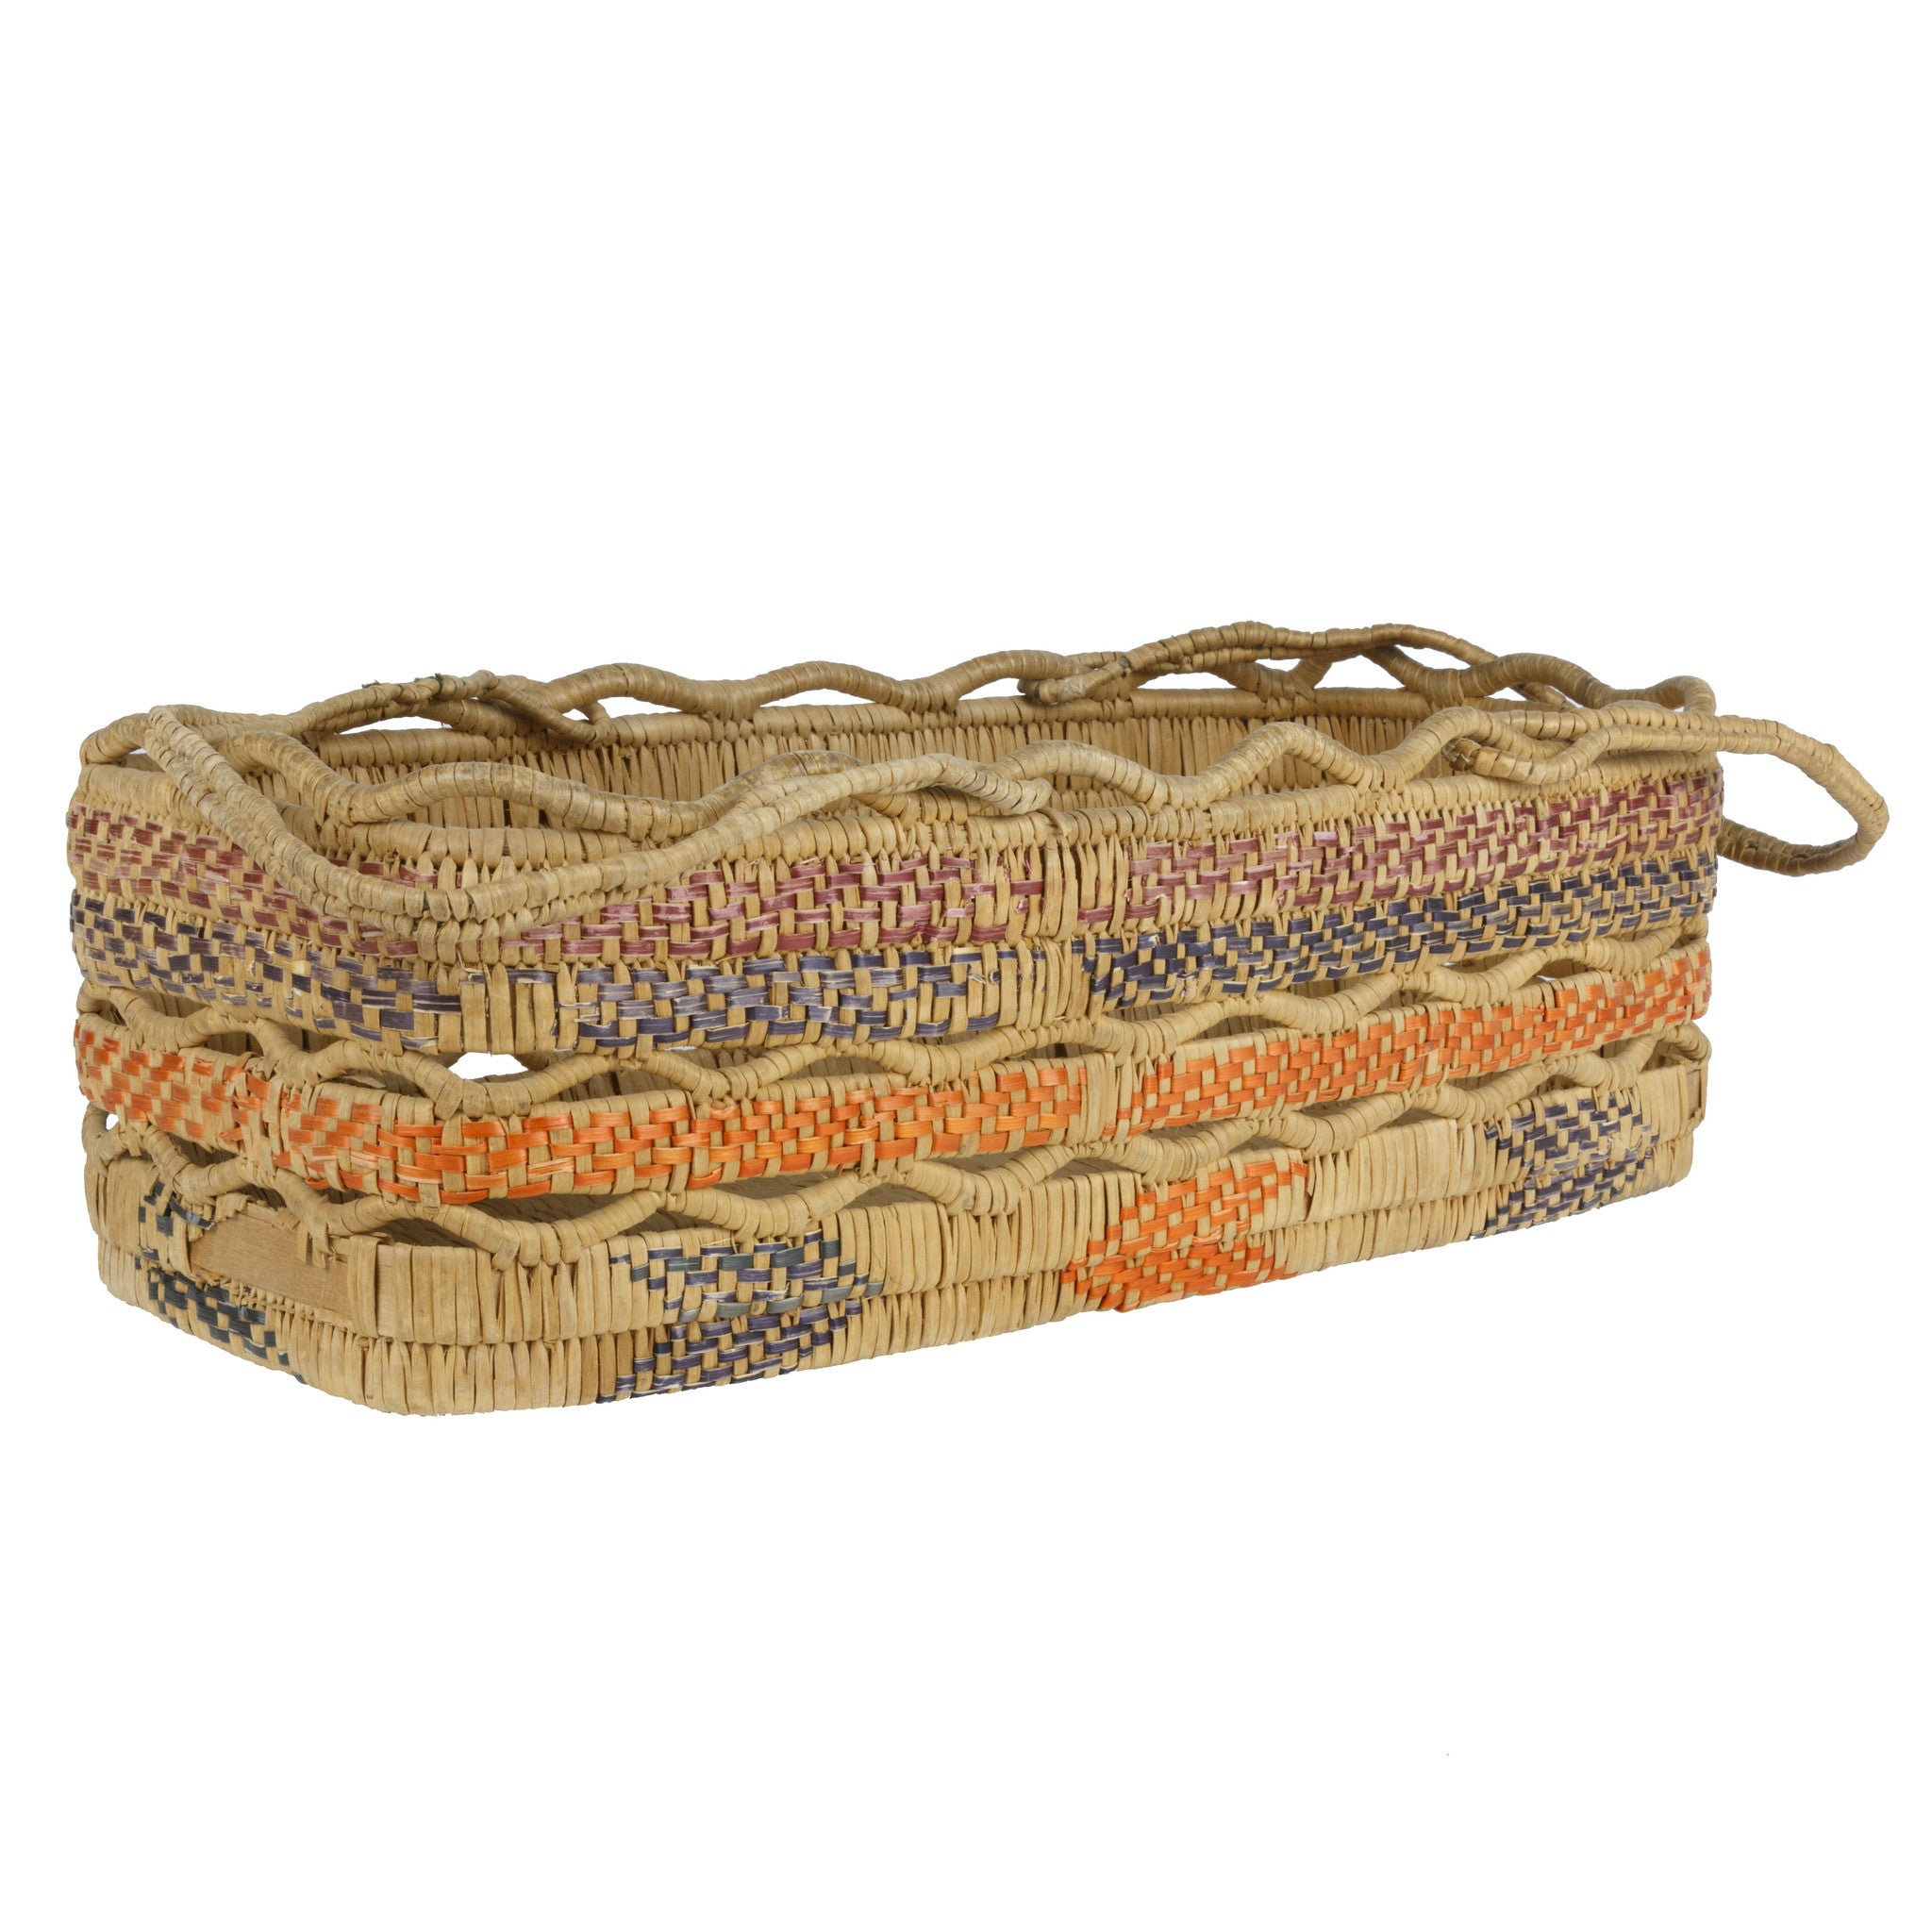 Open Weave Klickitat Carrying Basket